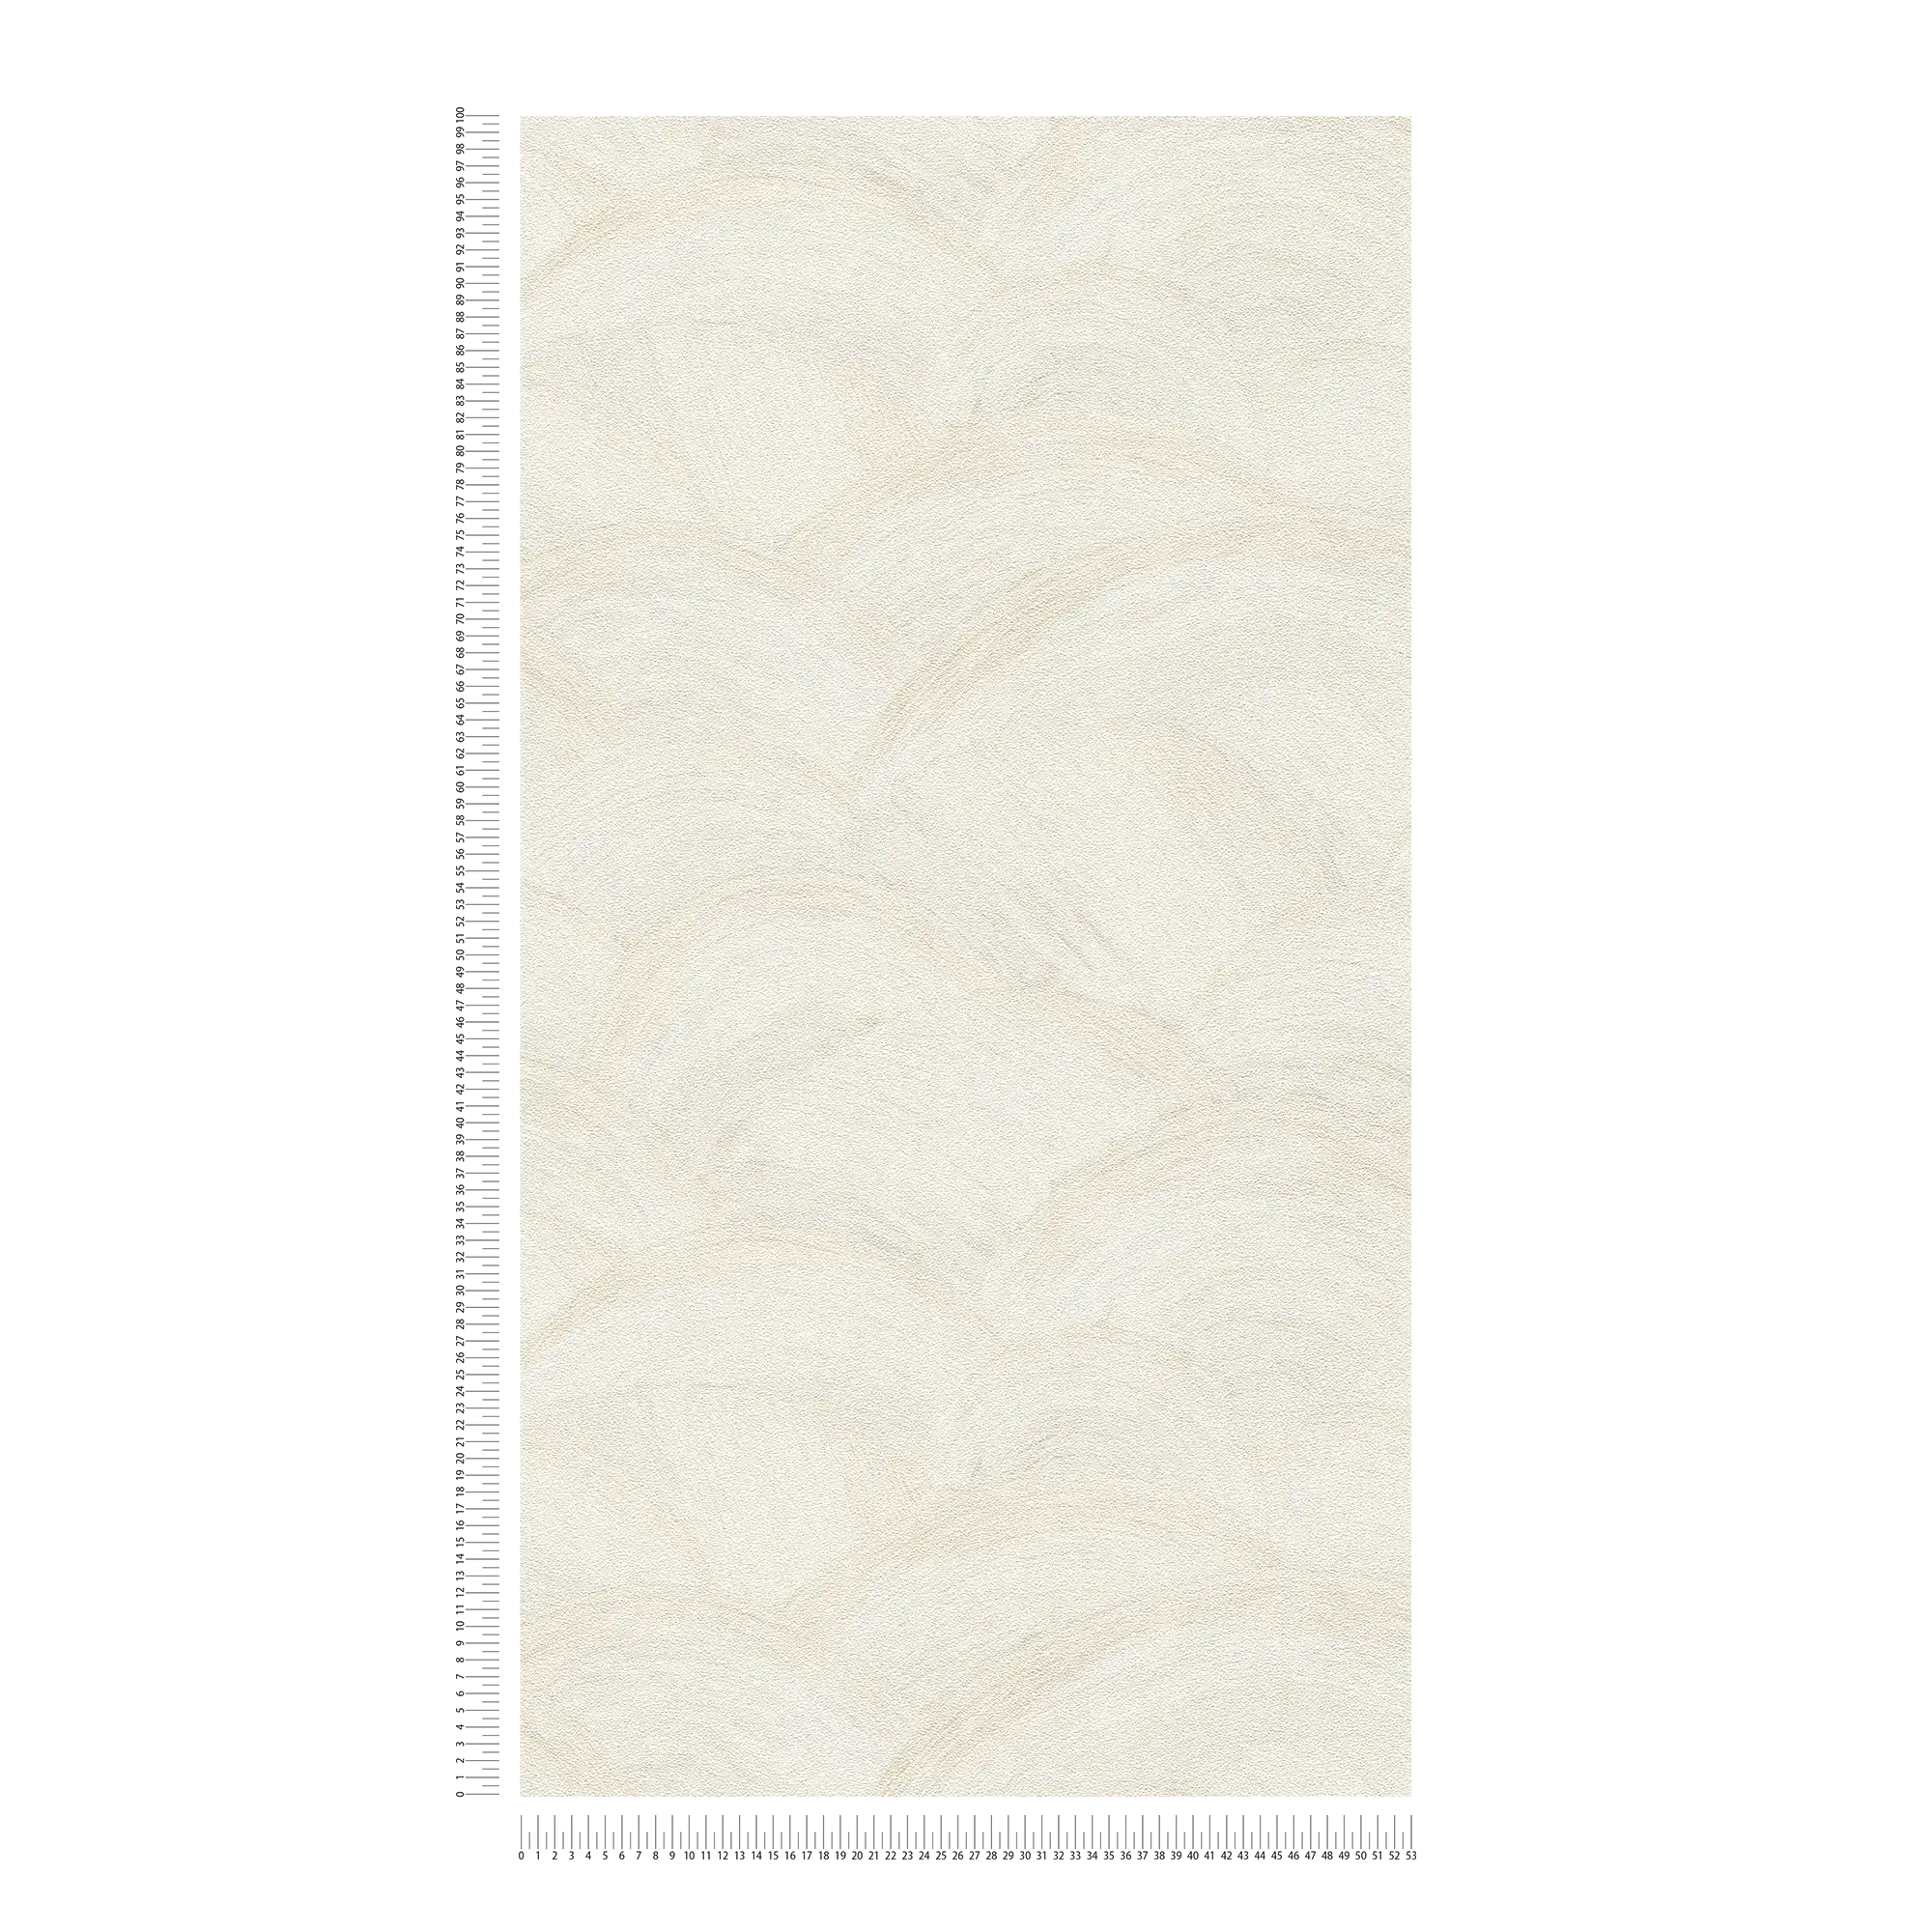             Papel pintado no tejido con sutil motivo ondulado - blanco, crema, gris
        